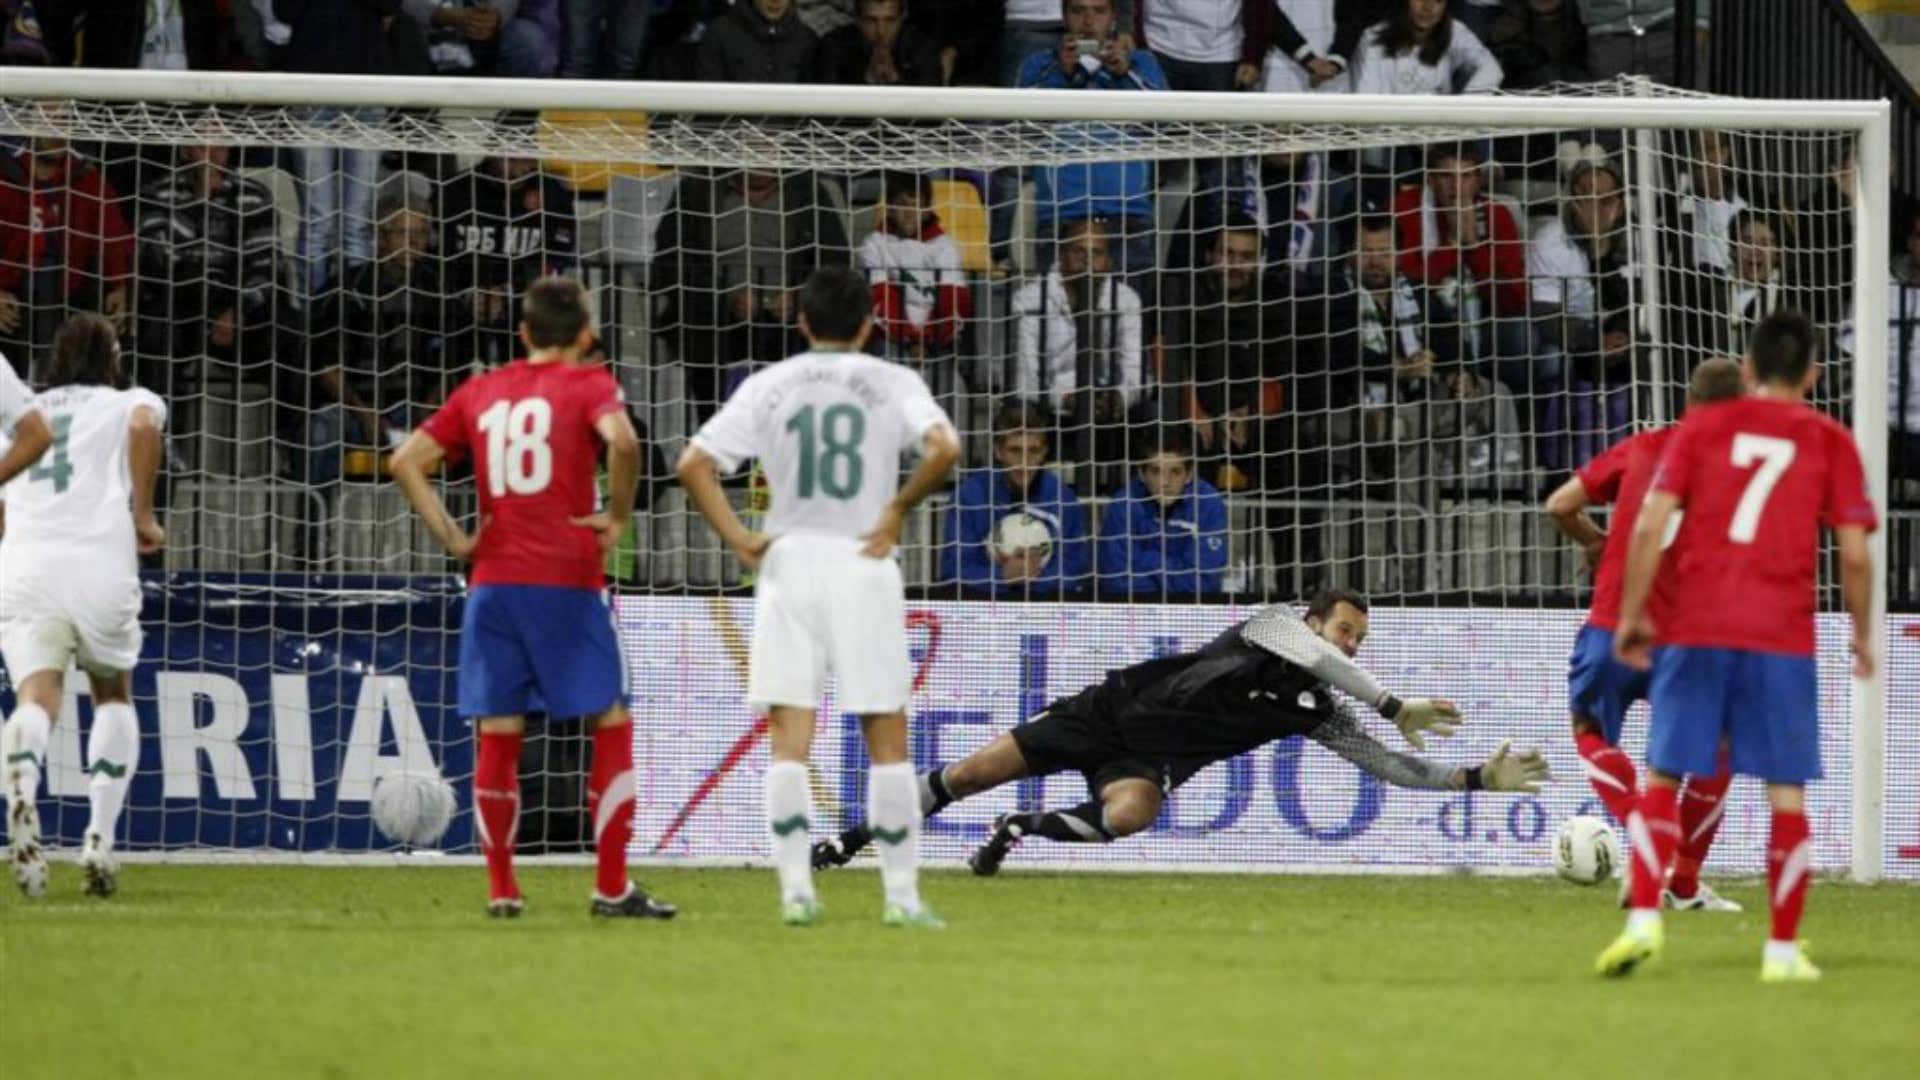 Samir Handanovic Nemanja Vidic Slovenia Serbia Euro 2012 qualifiers Maribor Ljudski vrt 11102011